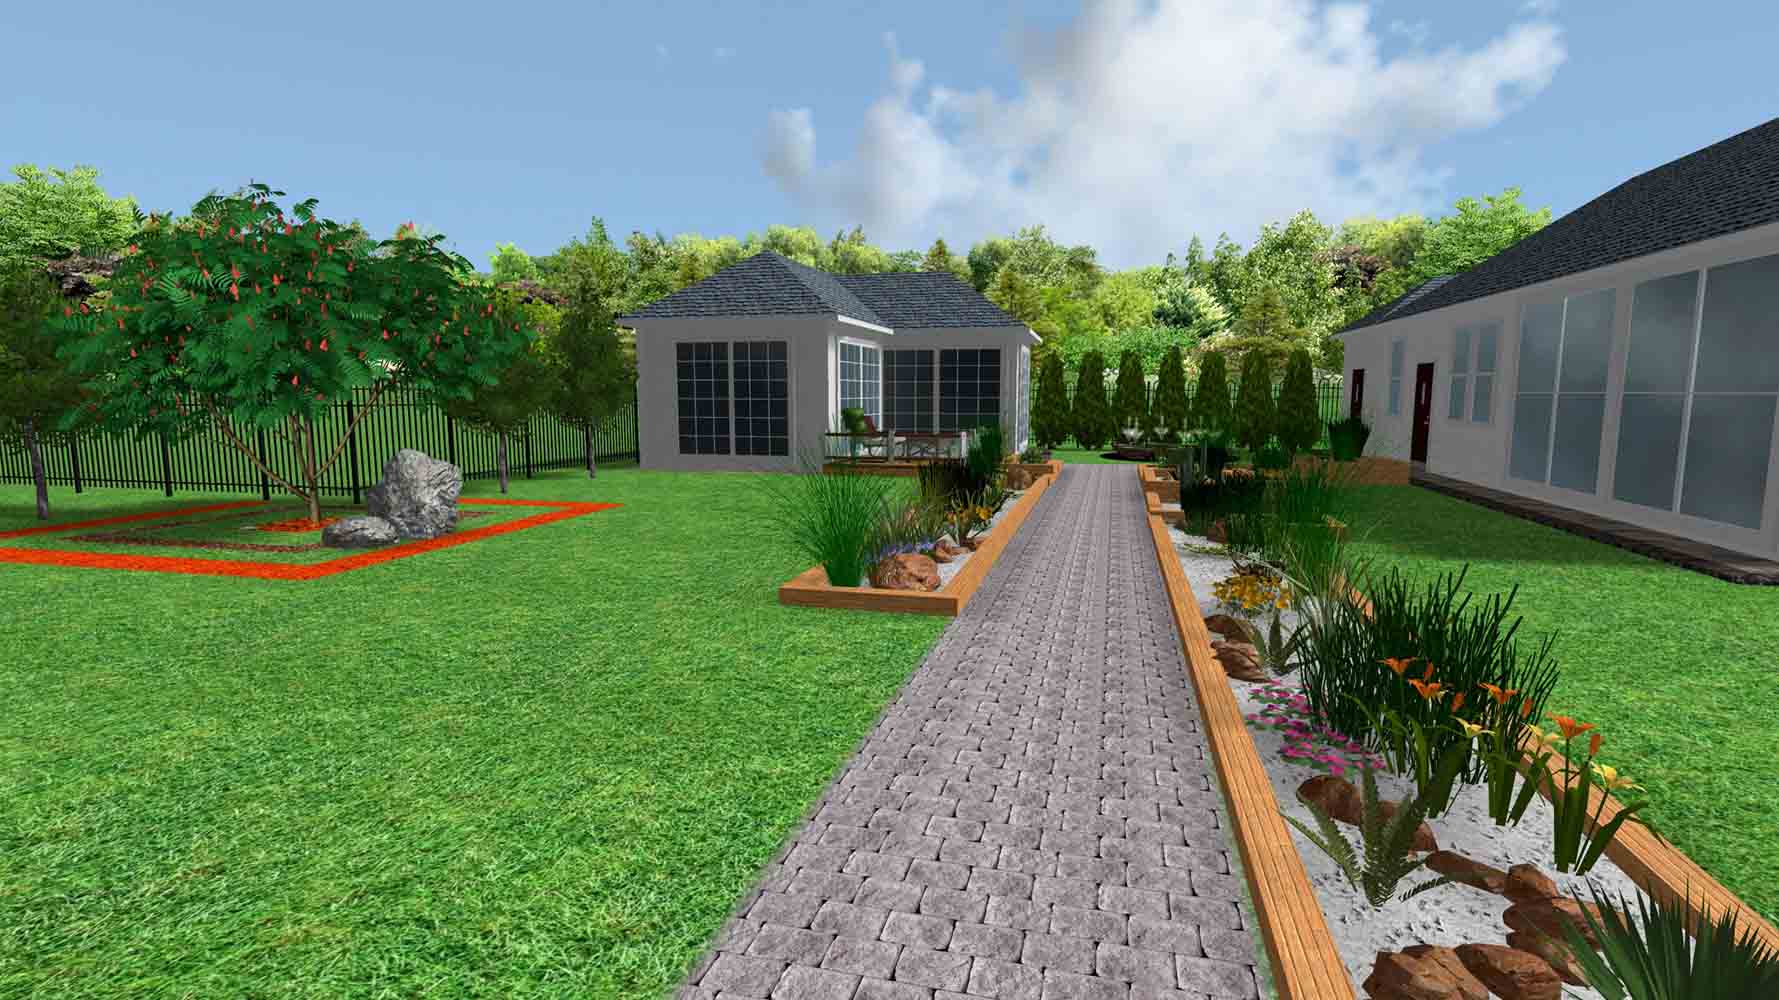 modern style garden by hedera 01 - 3D визуализация сада в стиле модерн by Hedera